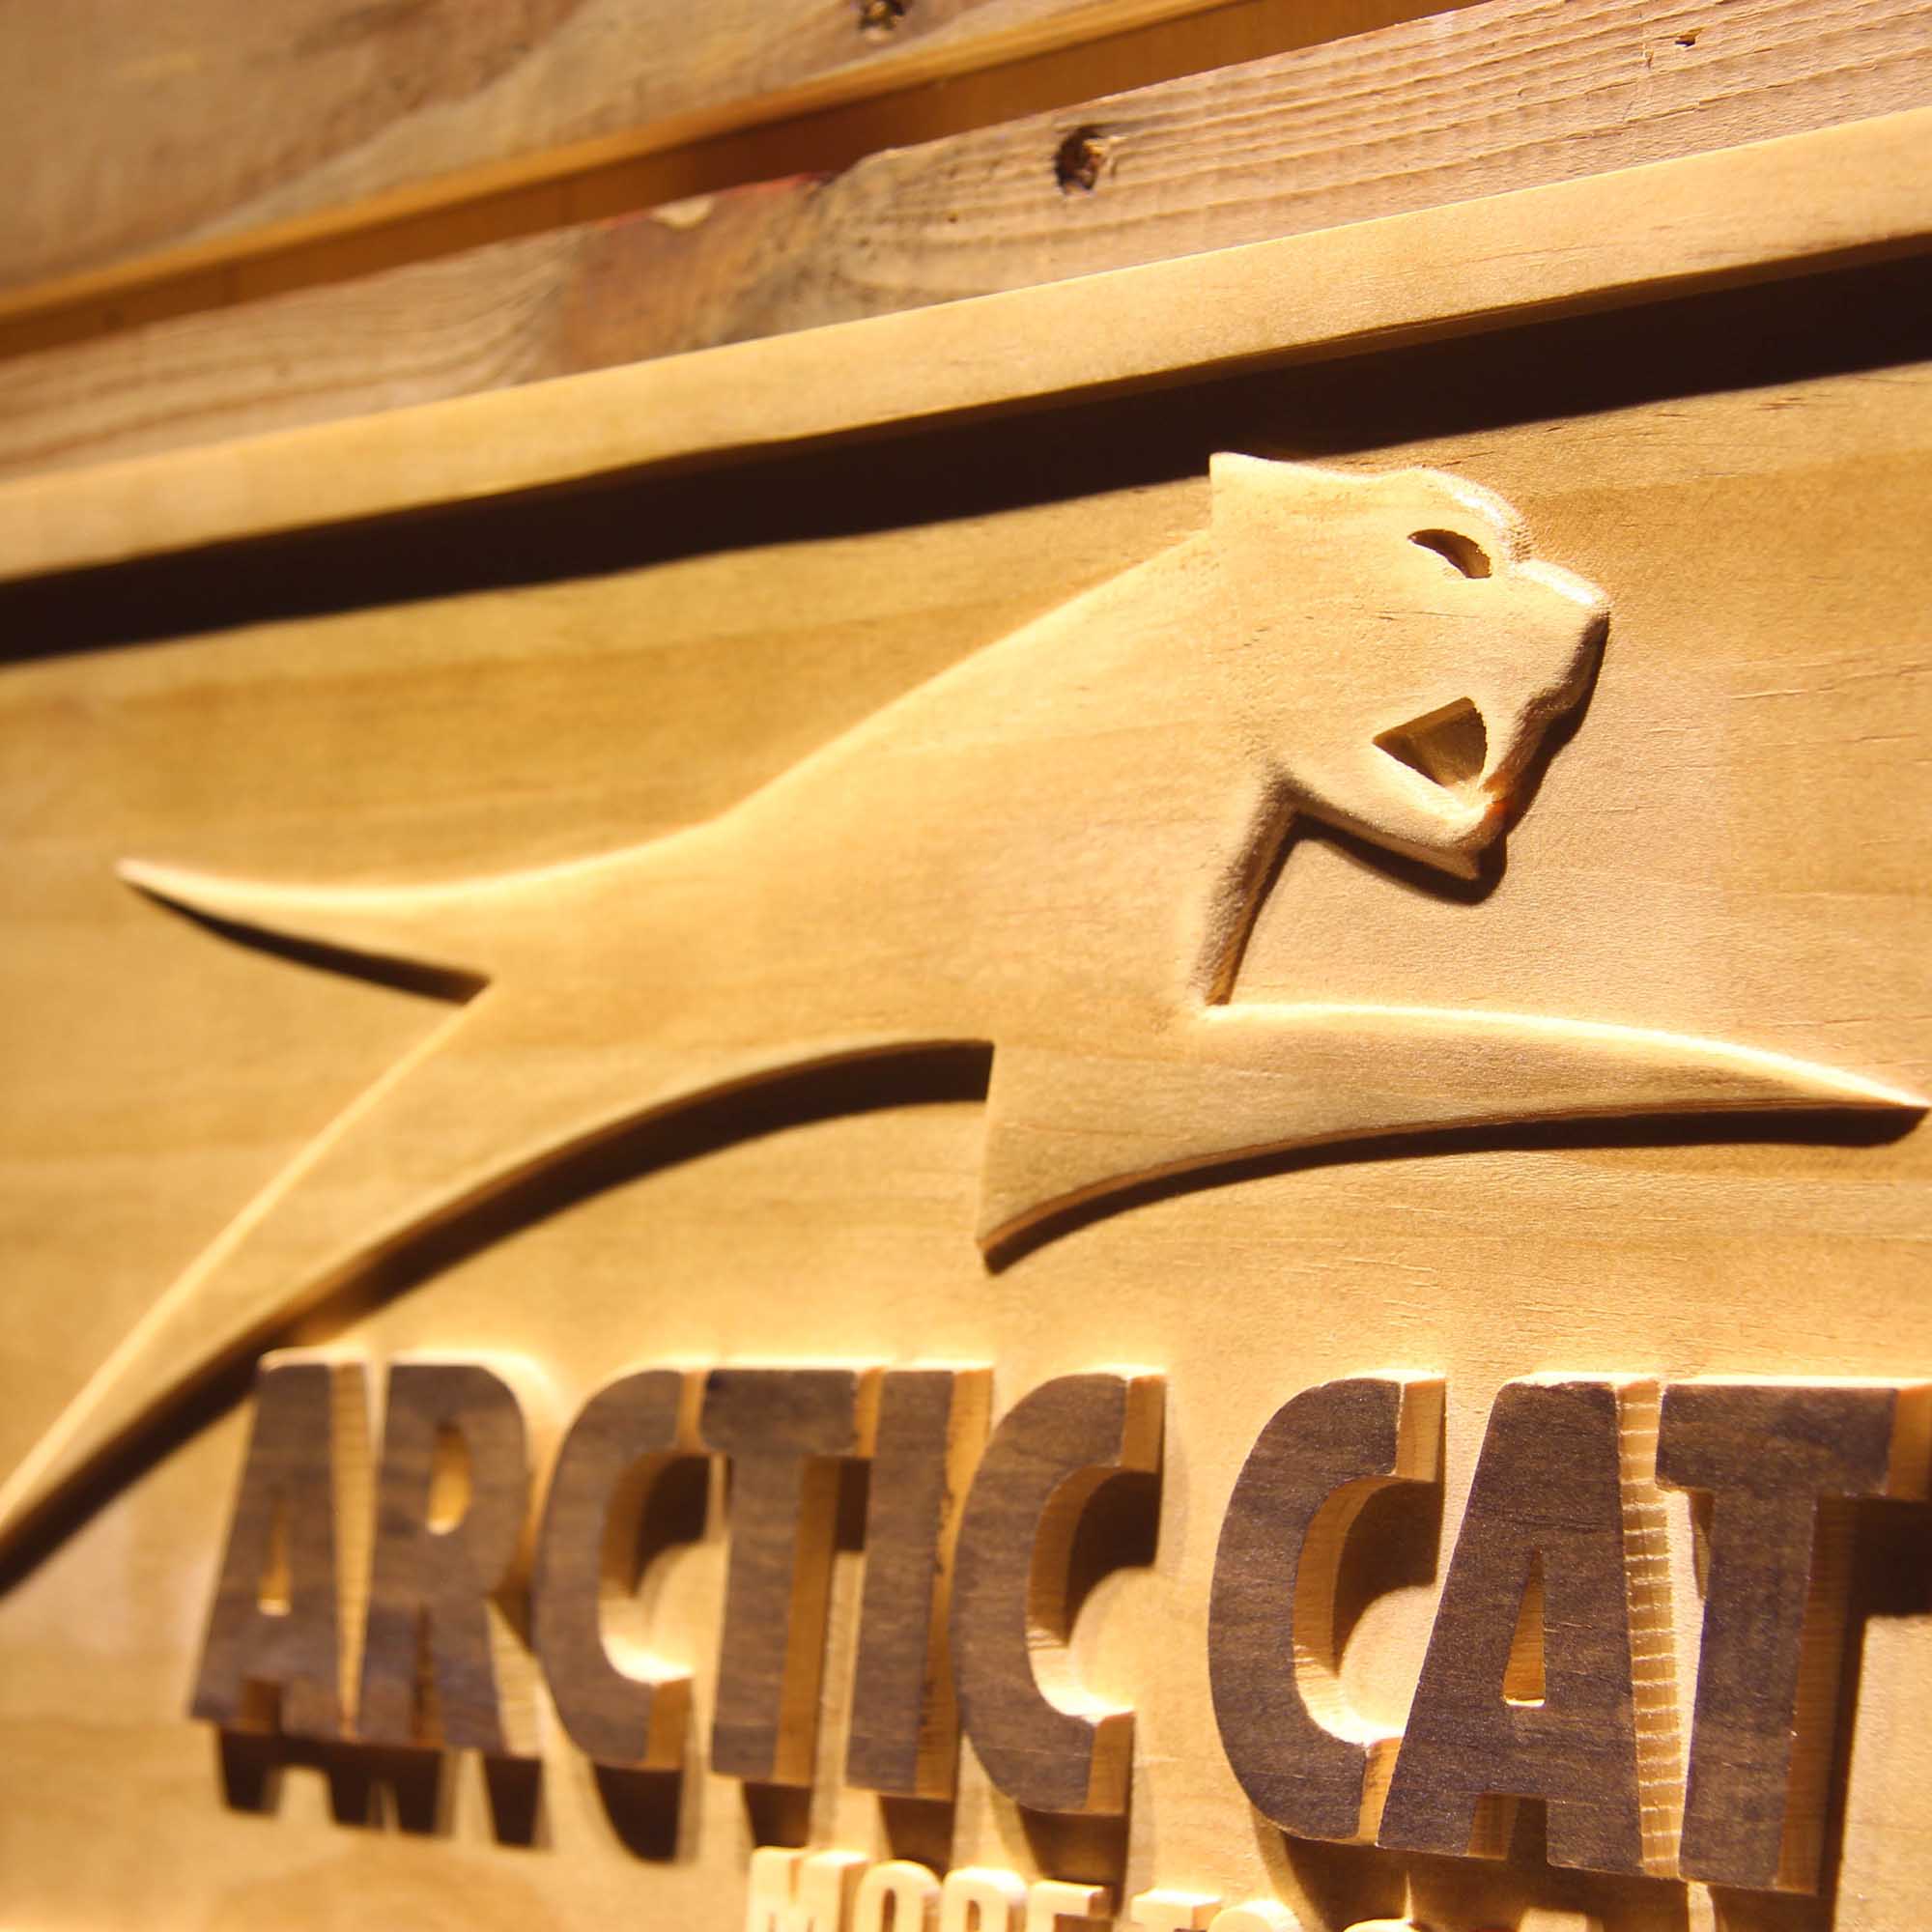 Arctic Cat Snowmobiles 3D Wooden Engrave Sign